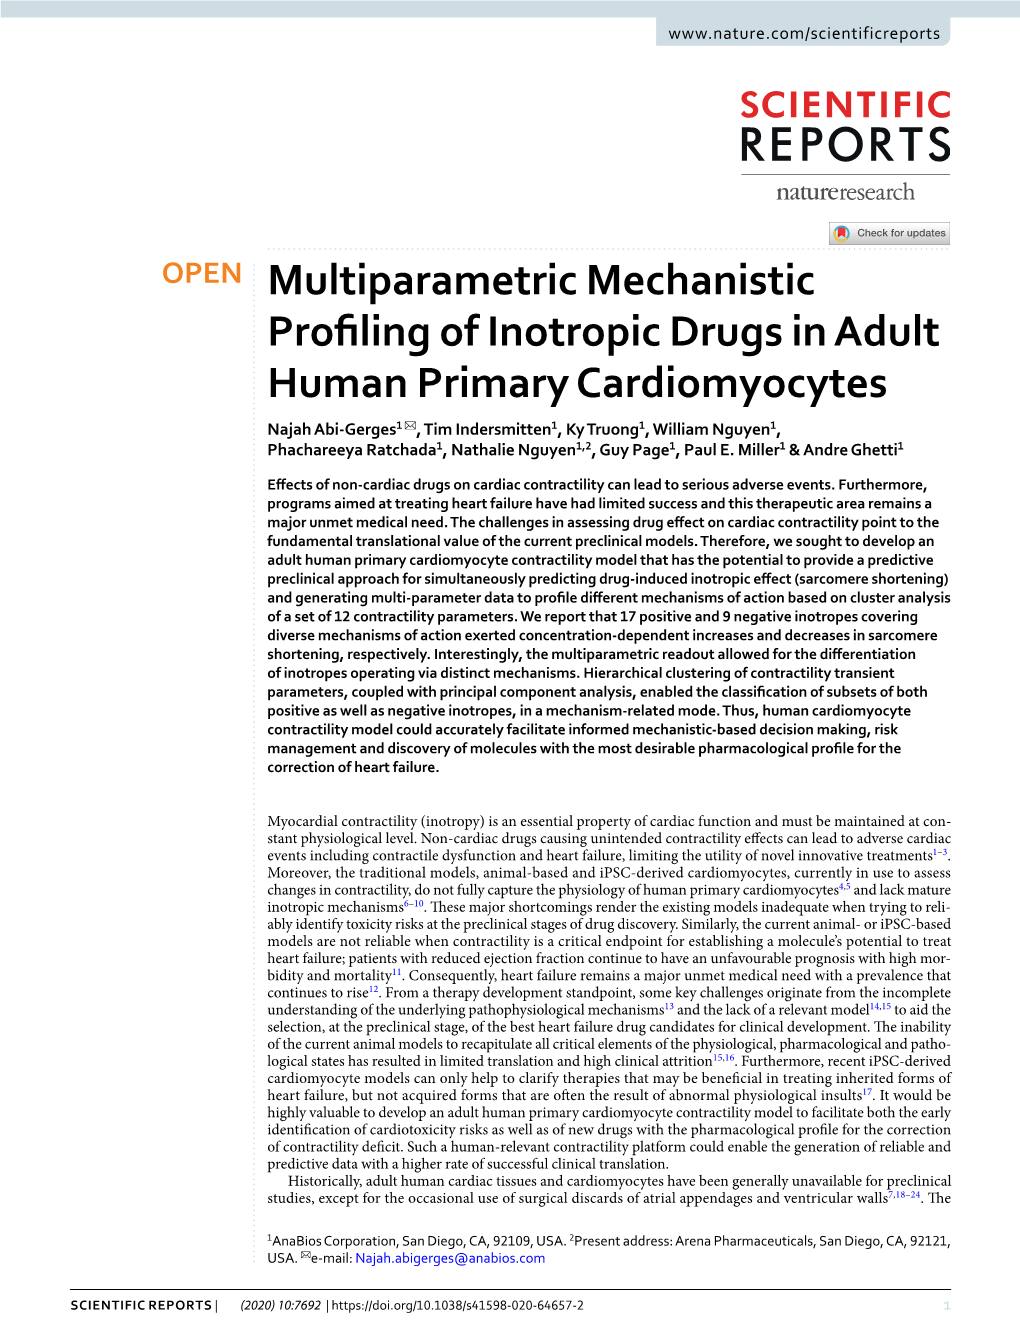 Multiparametric Mechanistic Profiling of Inotropic Drugs in Adult Human